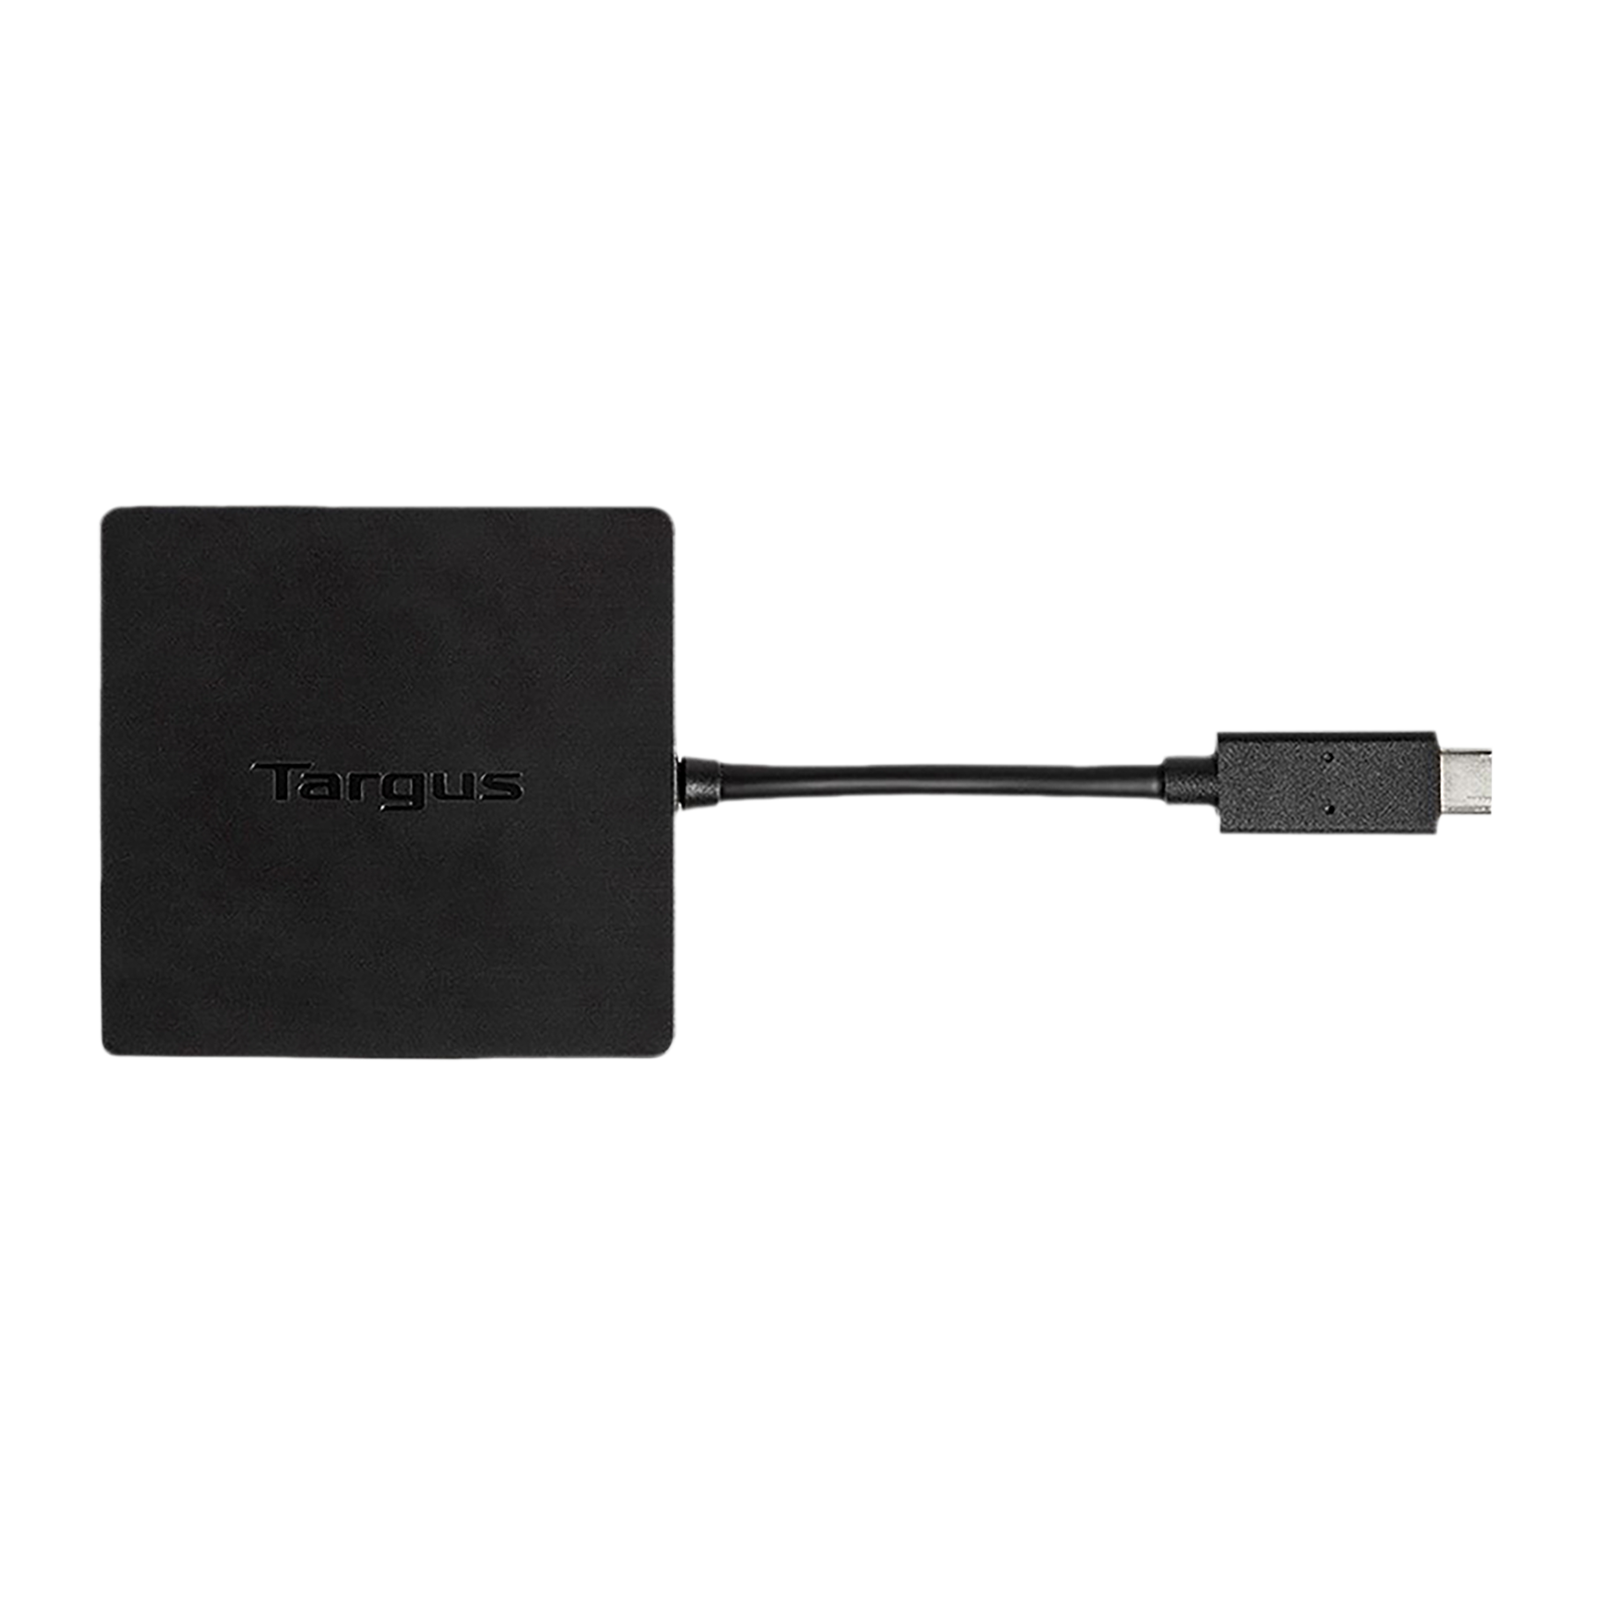 Targus USB 3.0 Type C to USB 3.0 Type A, HDMI, VGA, RJ45 Travel Dock (4K UHD Display Support, Black)